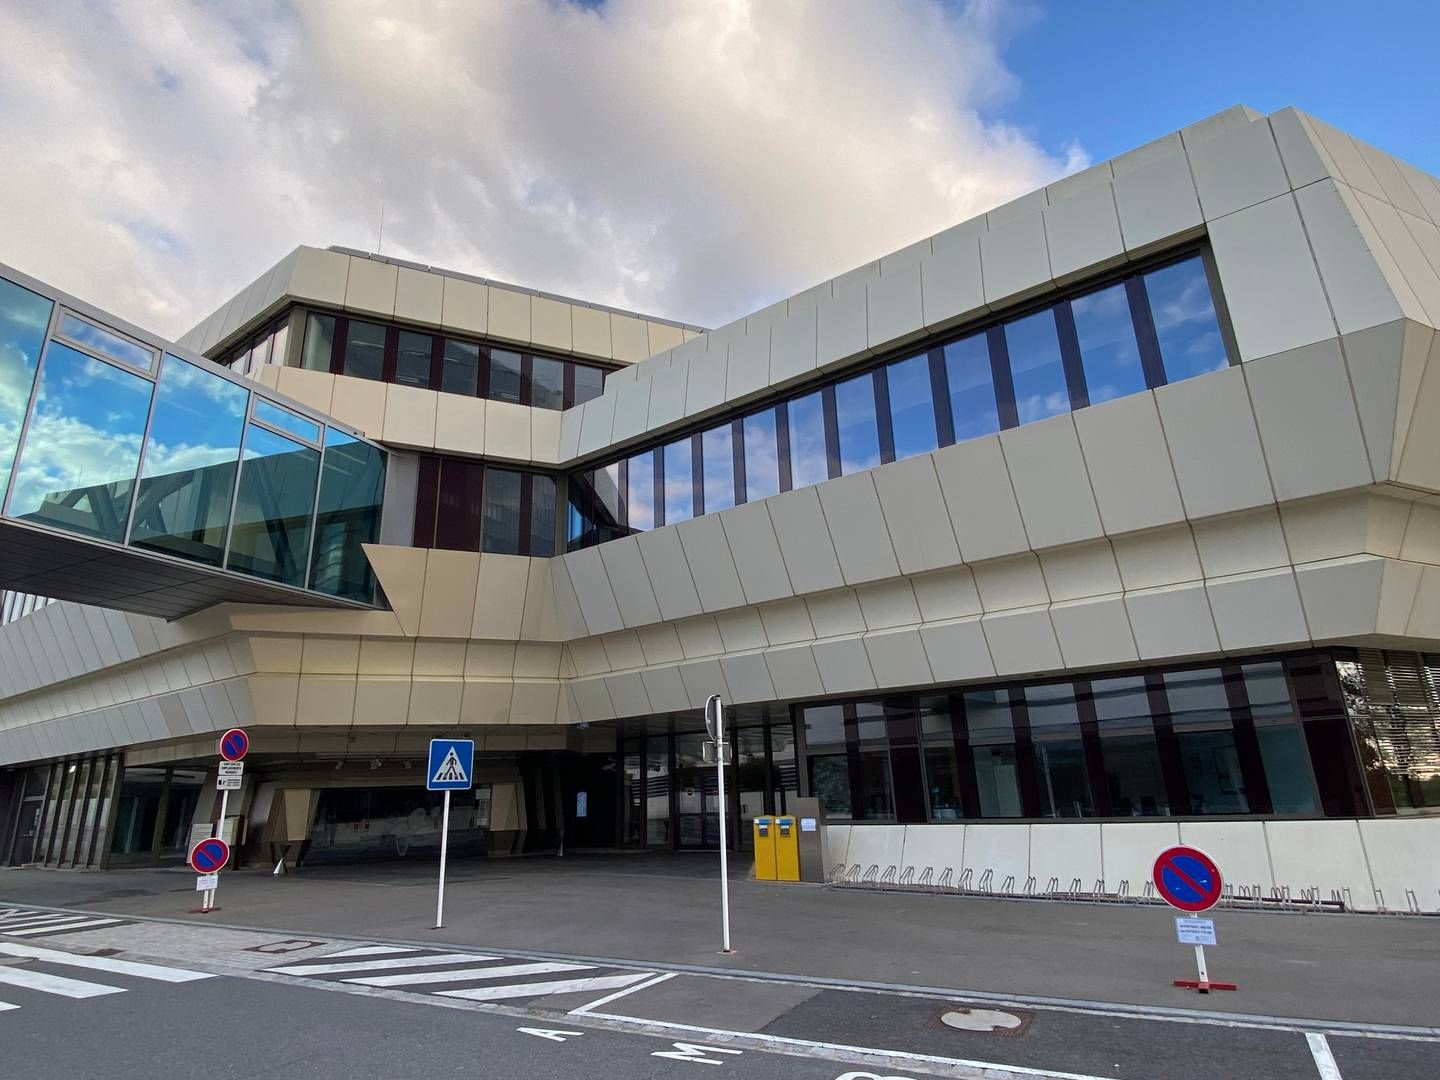 LUXEMBOURG: Bygget, som huser Efta-domstolen, ligger i Luxembourg. | Foto: Jonas Berge/NTB